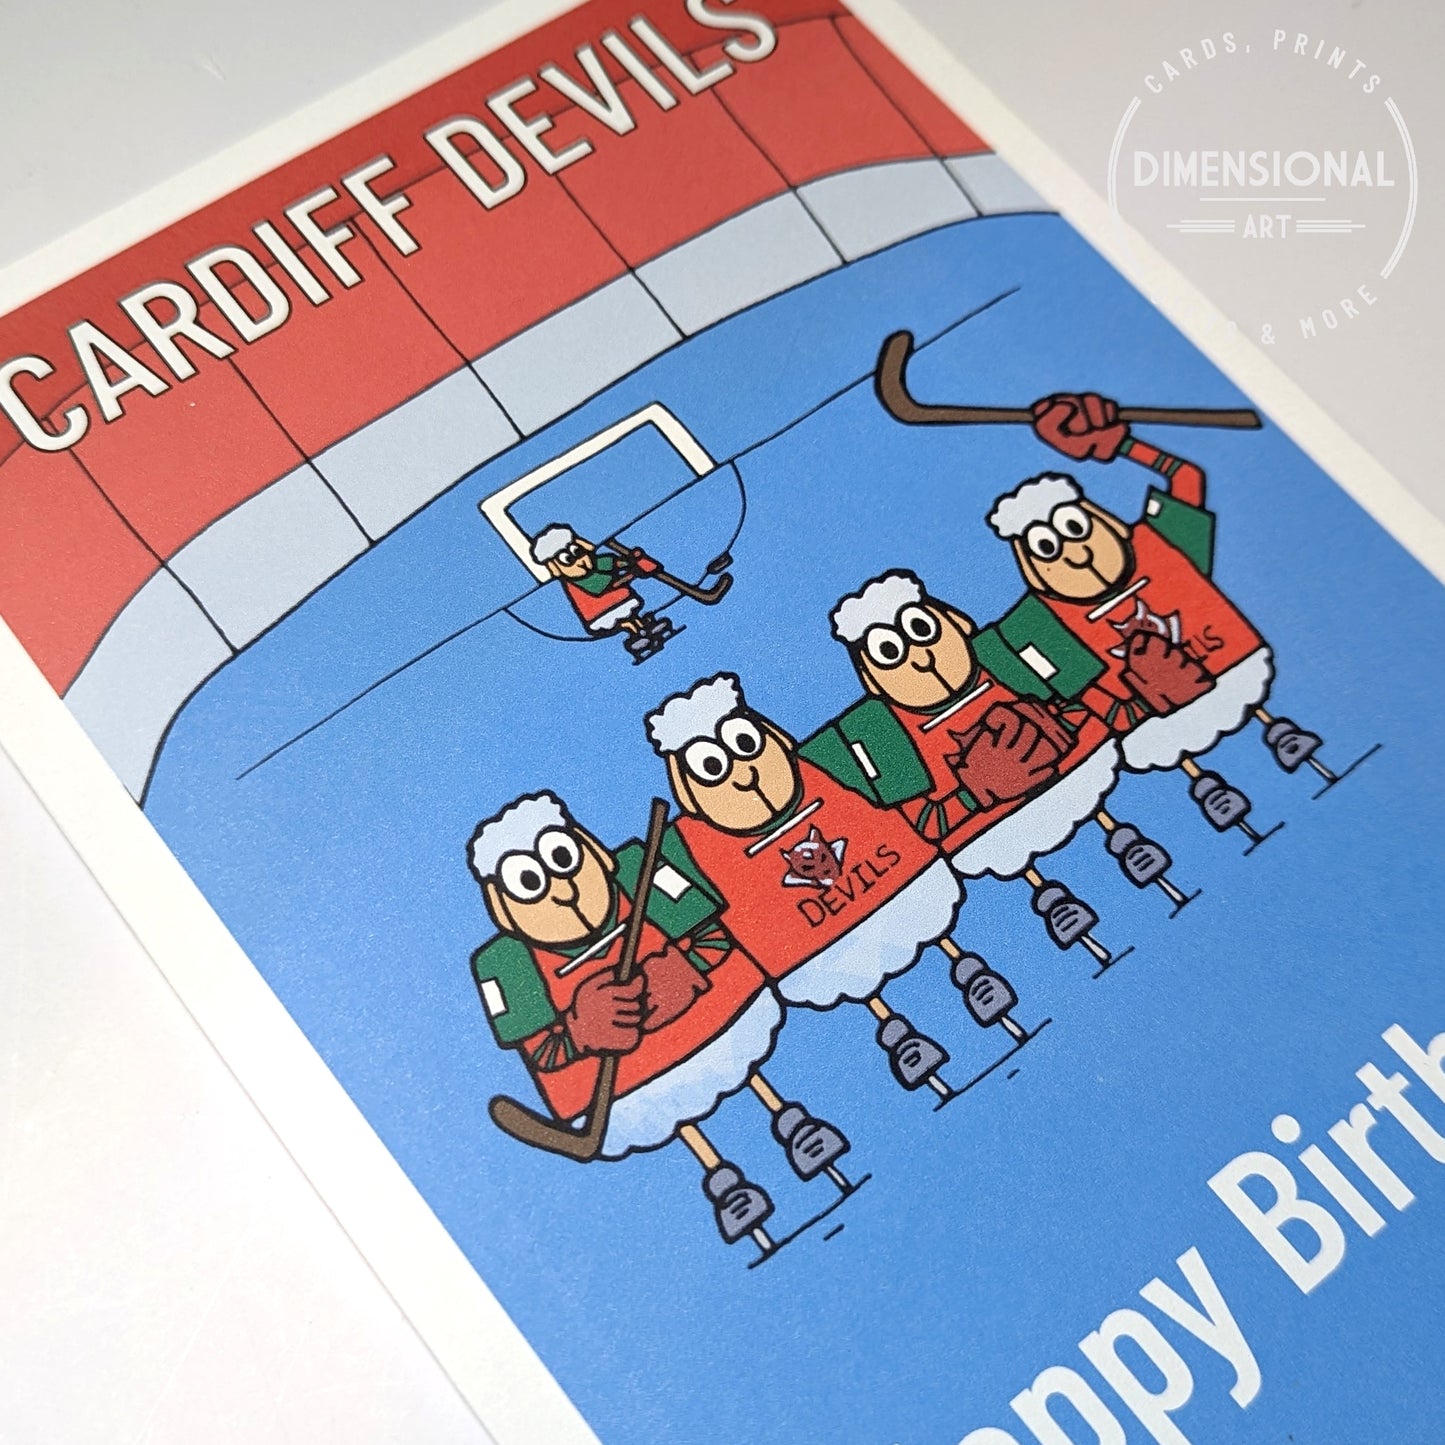 Cardiff Devils Ice hocky Sheep Card